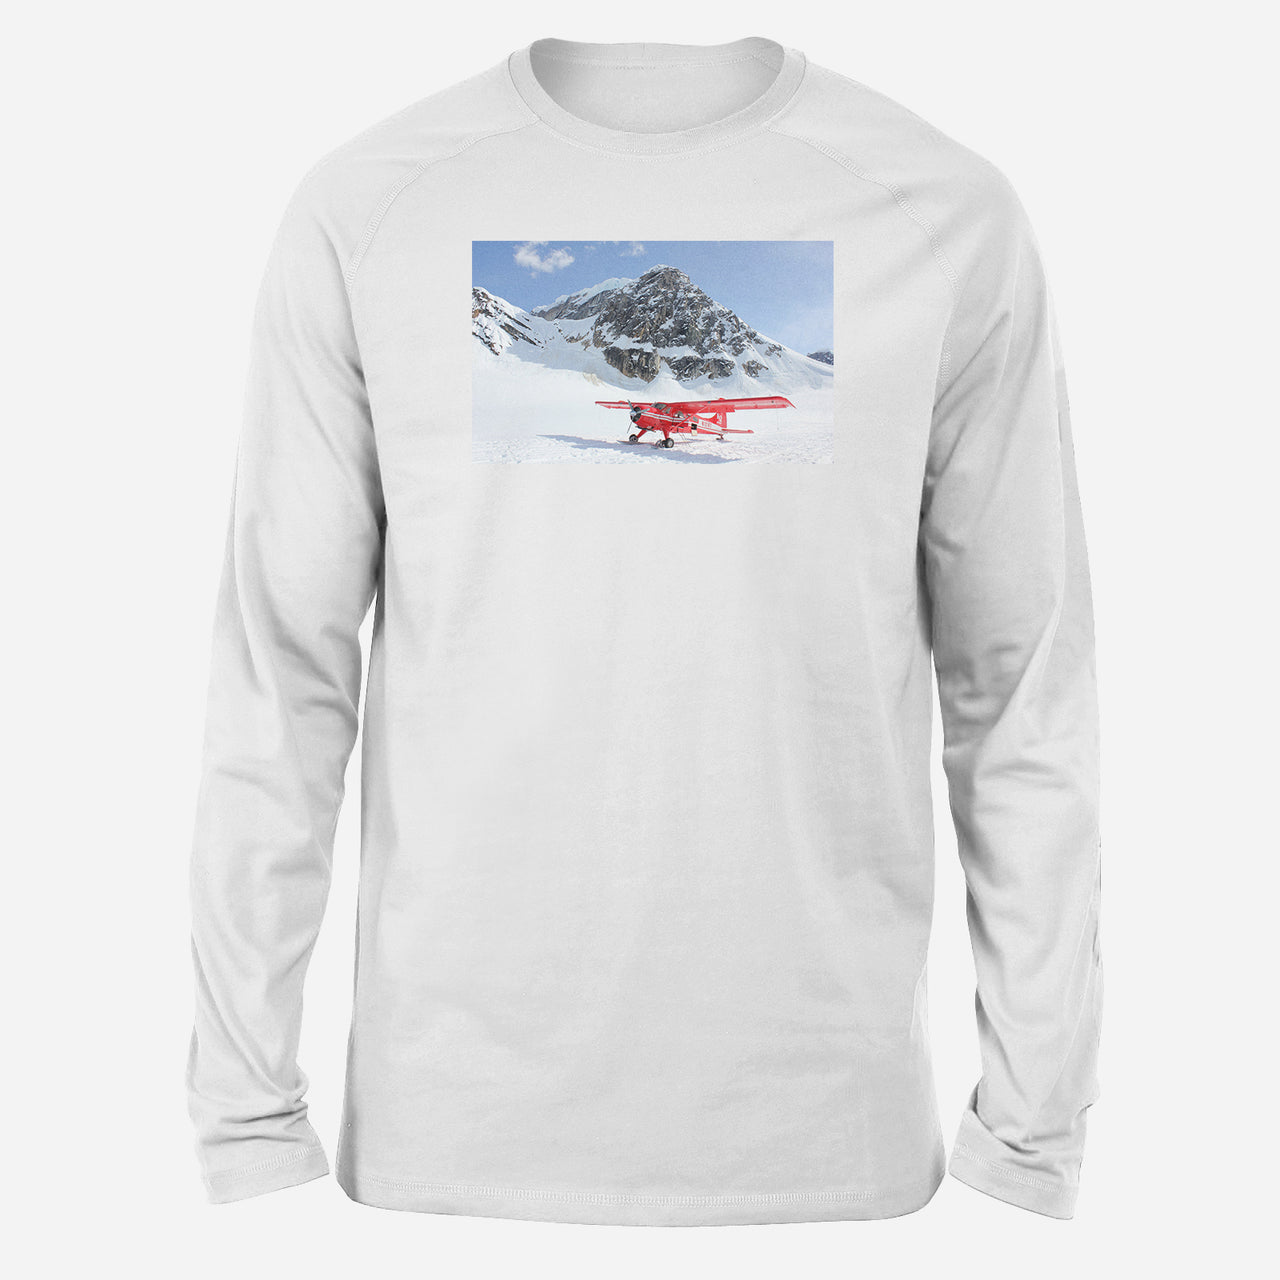 Amazing Snow Airplane Designed Long-Sleeve T-Shirts